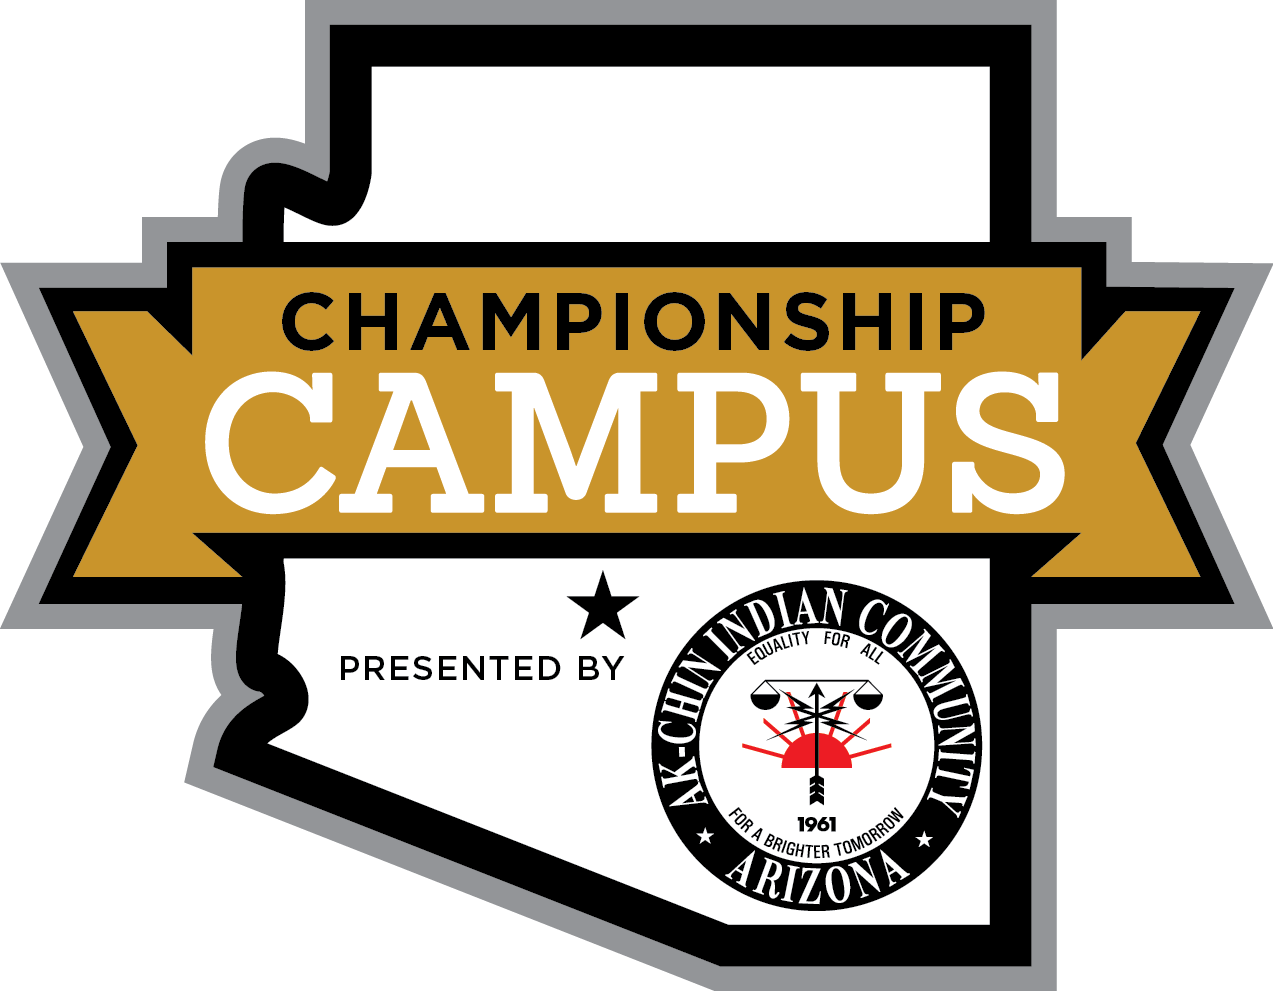 Championship campus logo